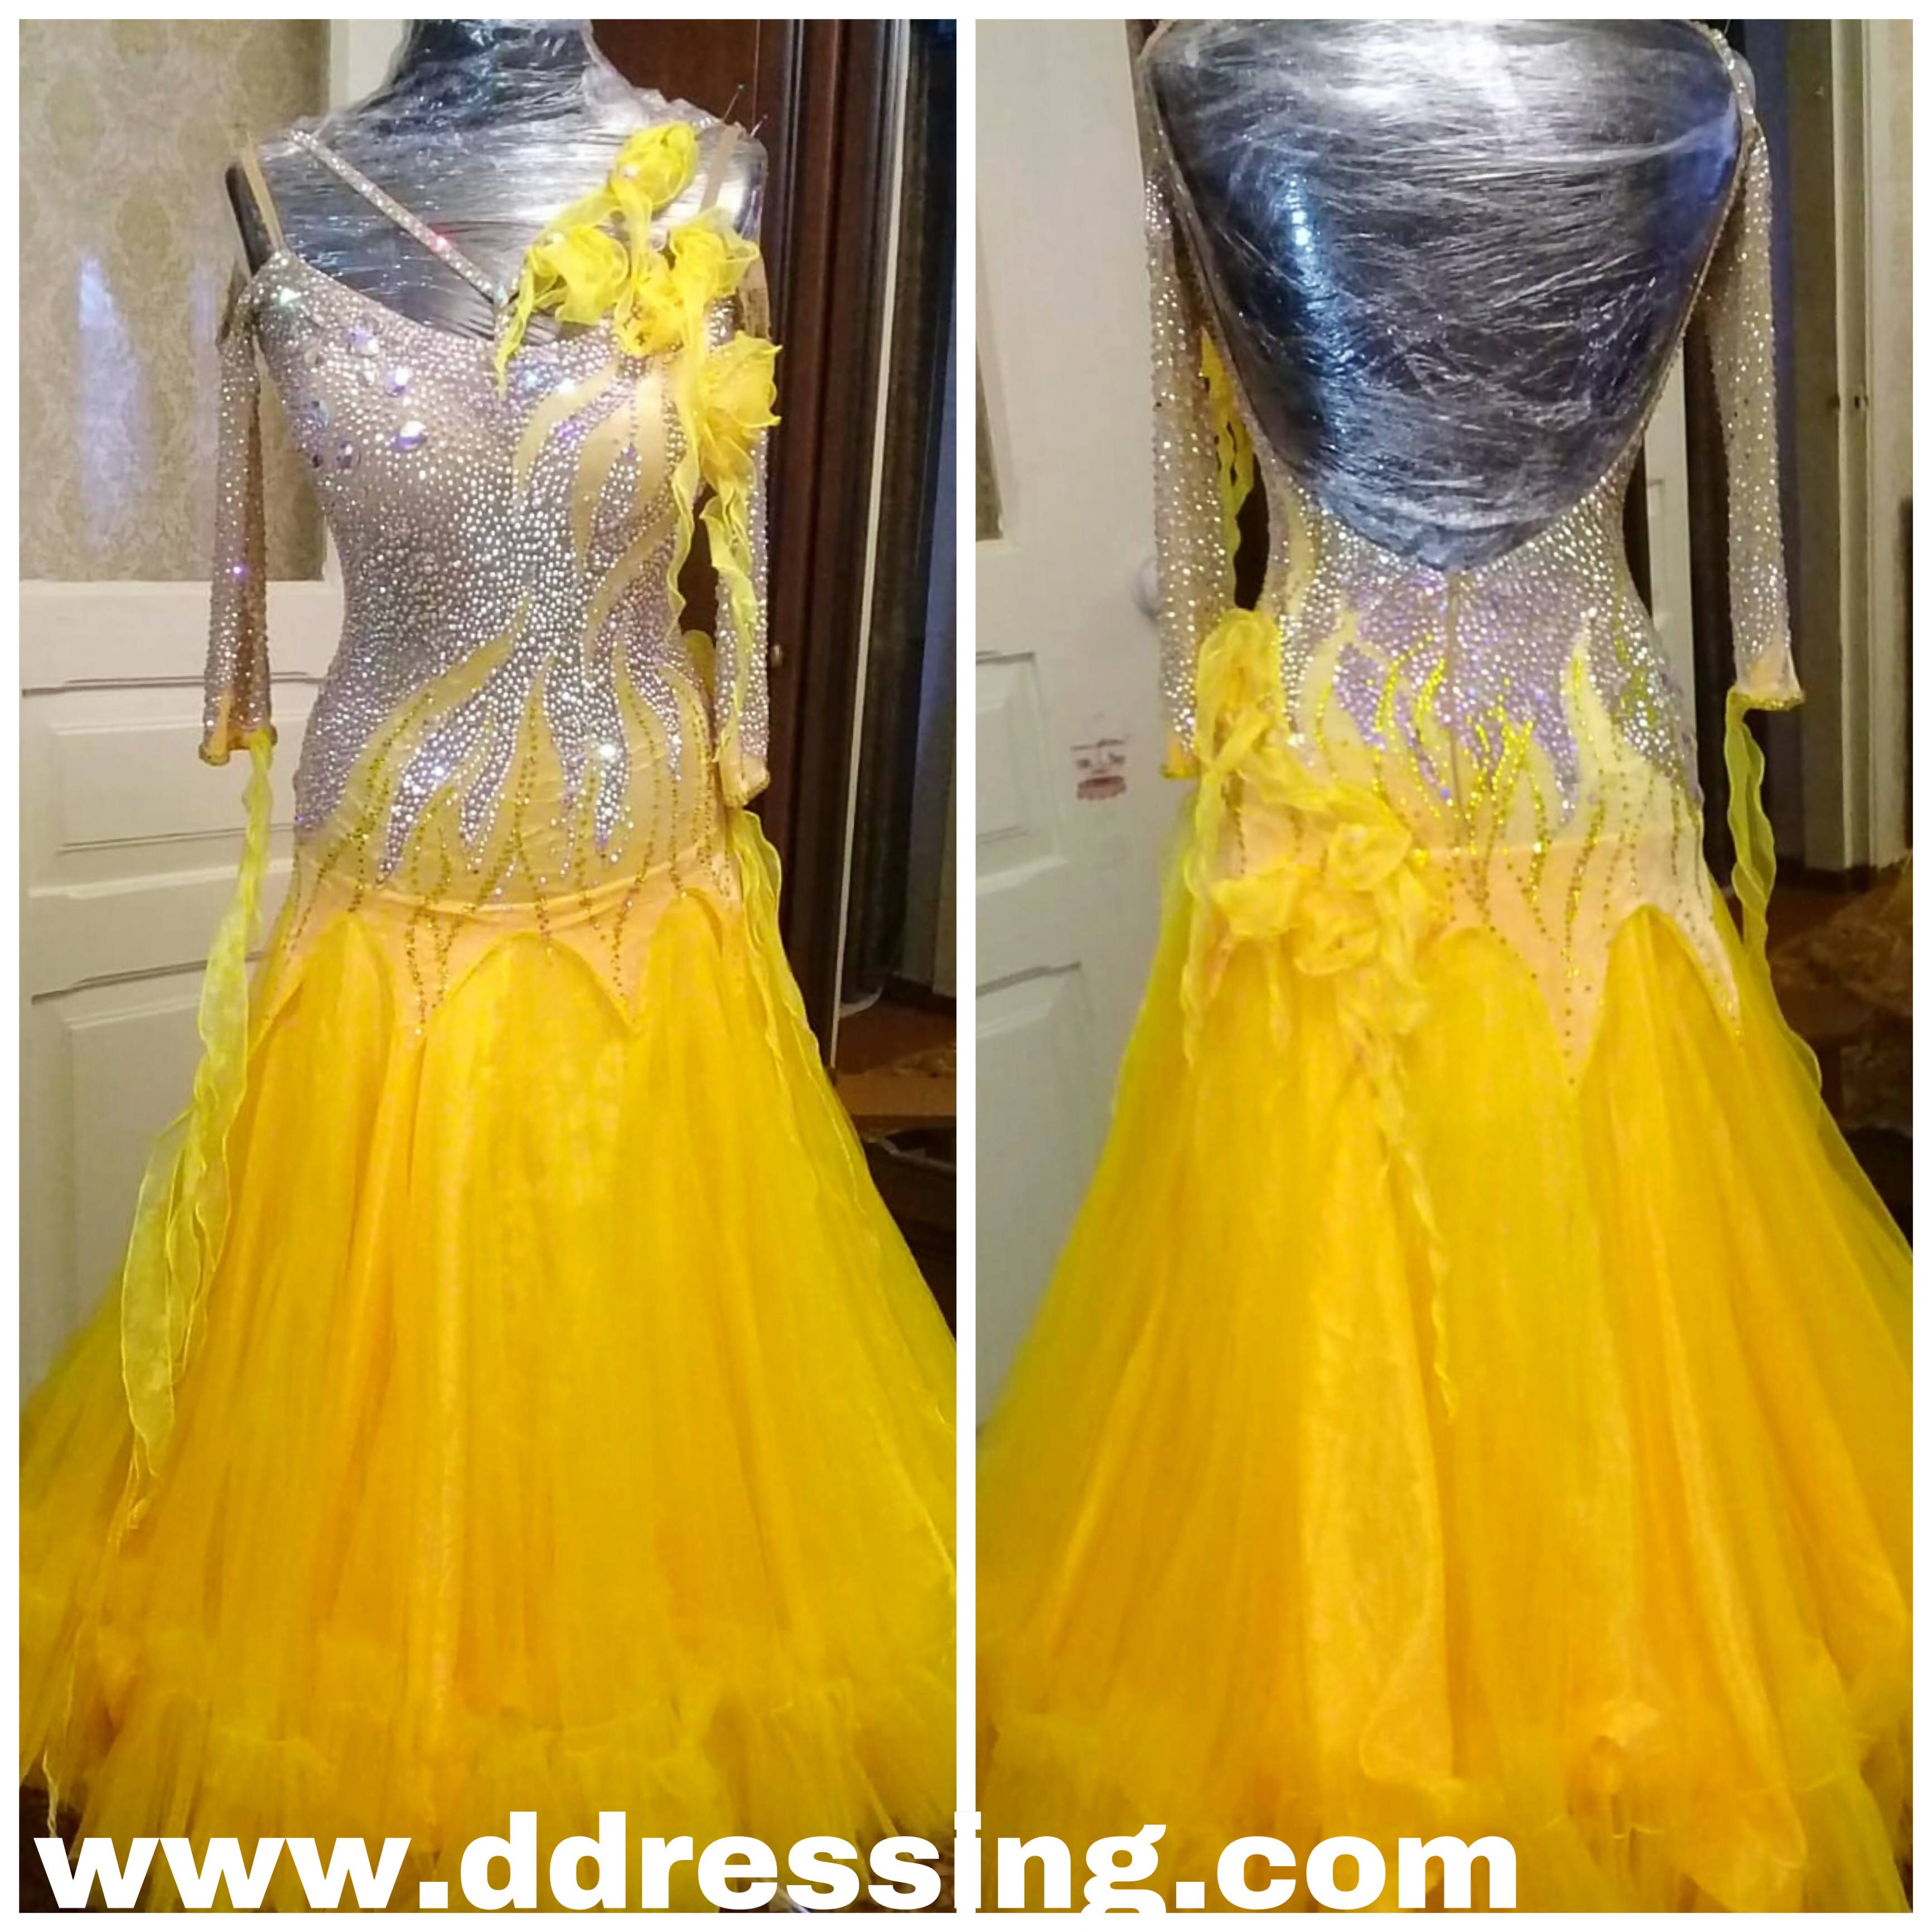 Yellow Standard Dress - DDressing